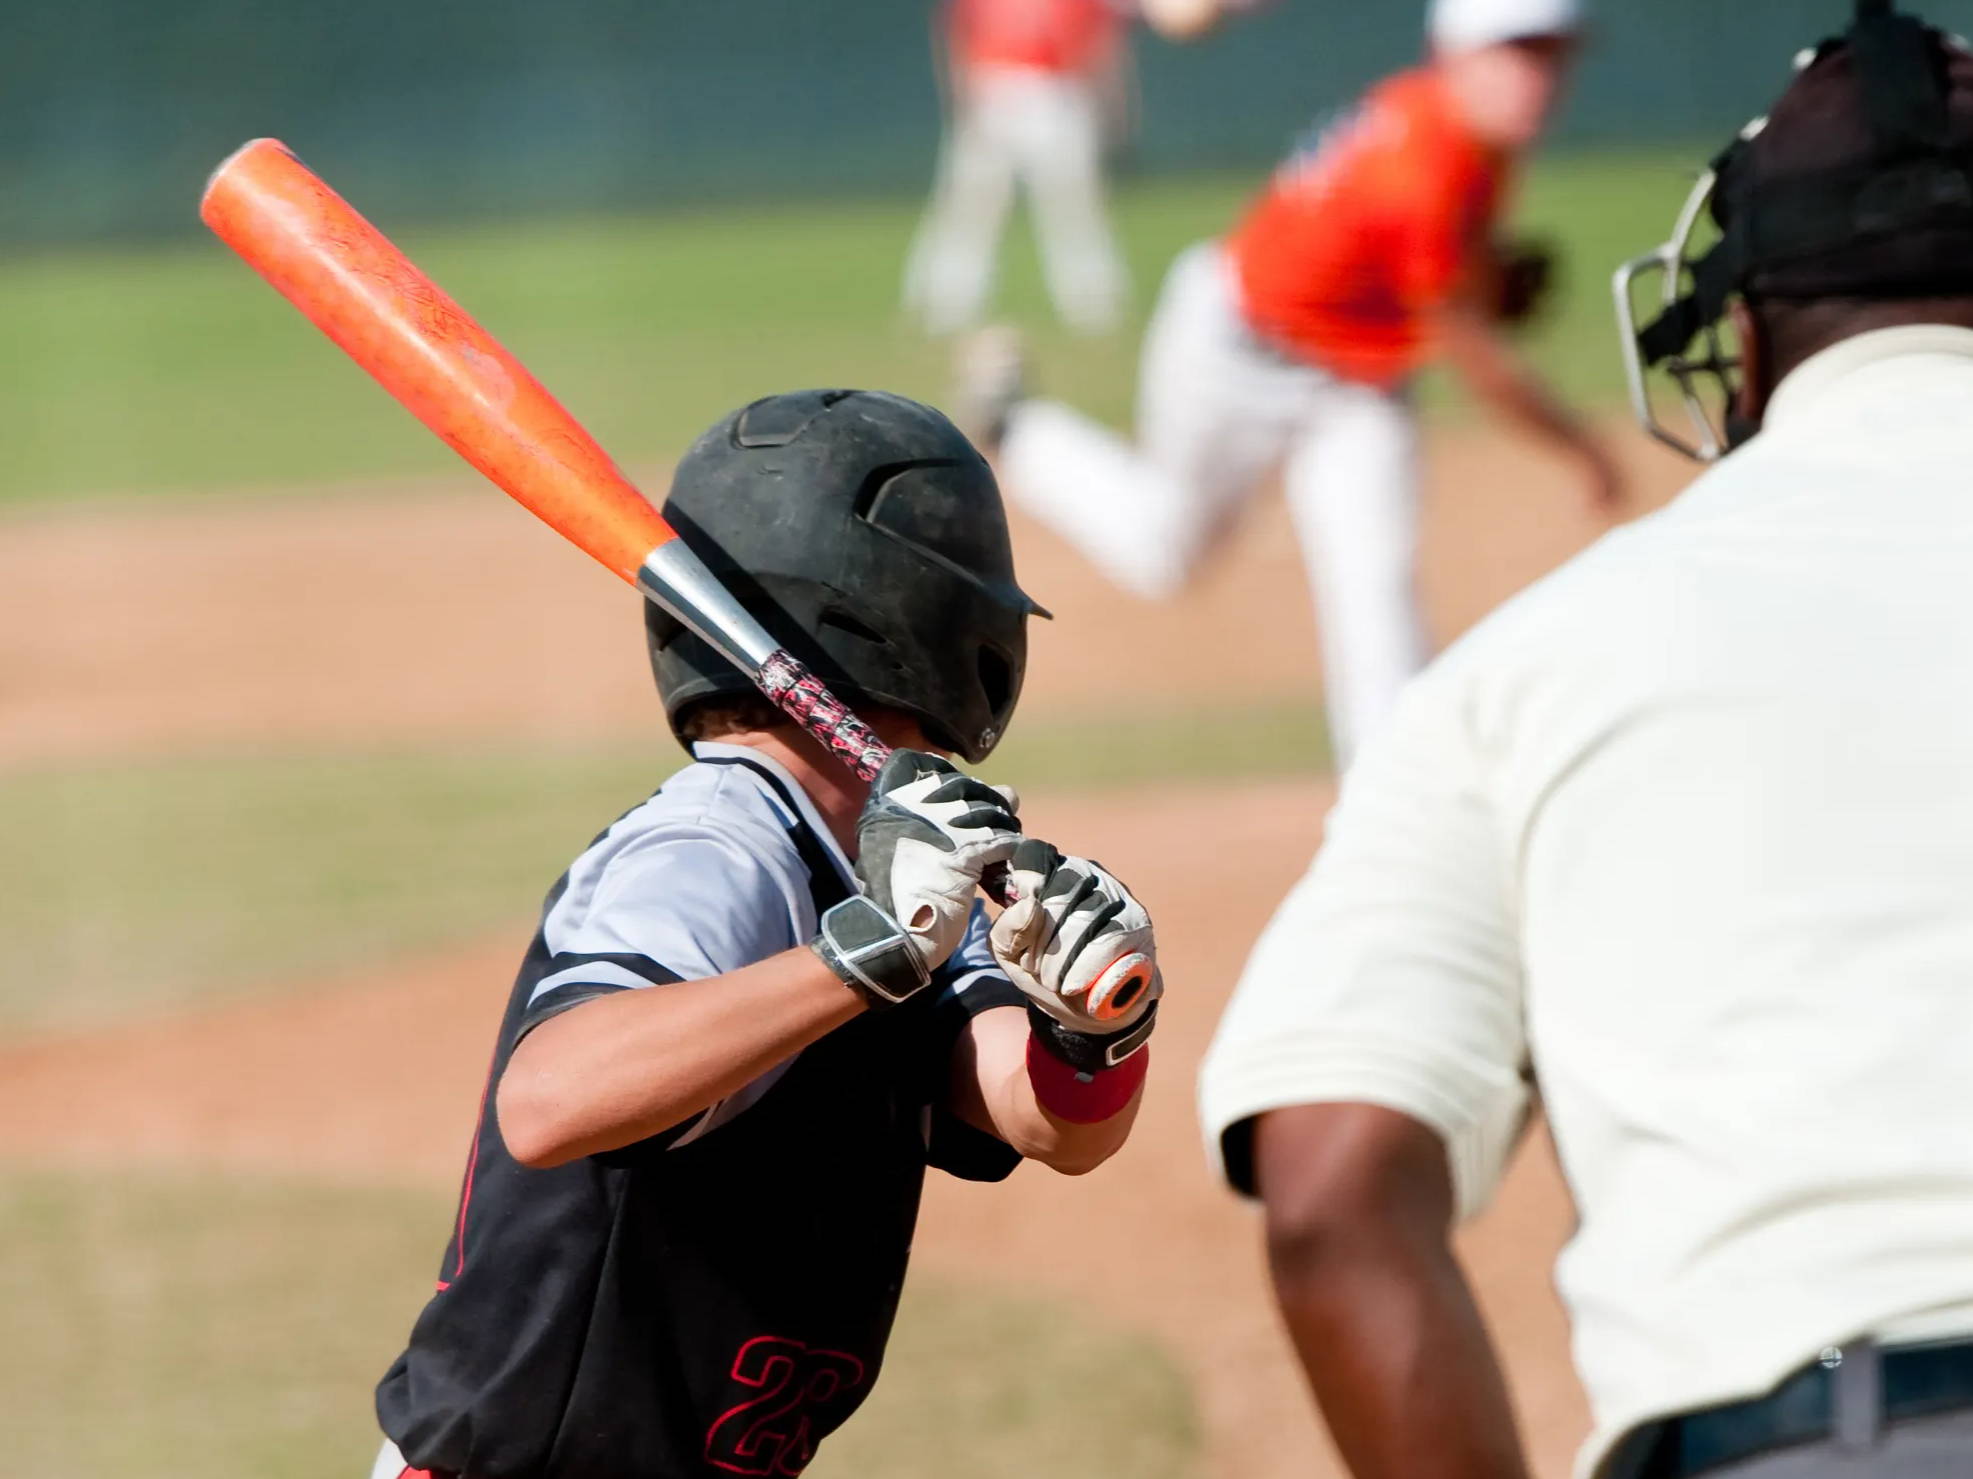 Kid up to bat playing baseball